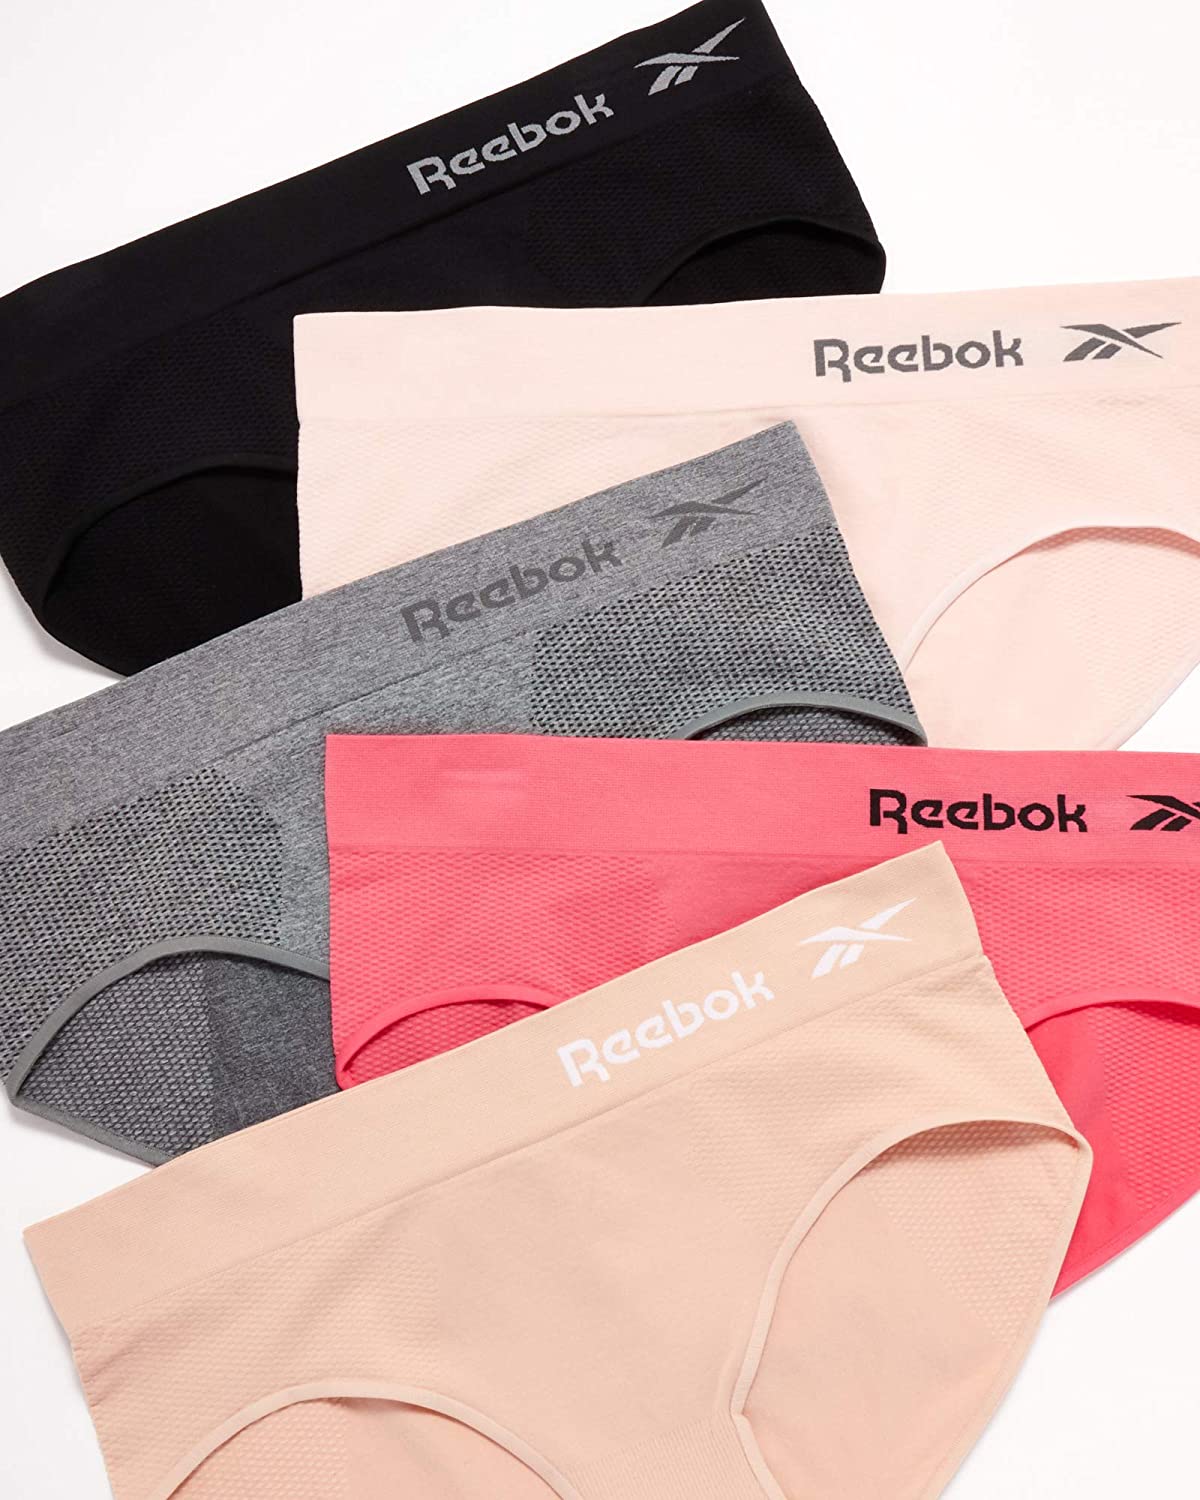 Reebok Womens Seamless Hipster Panties 5-Pack